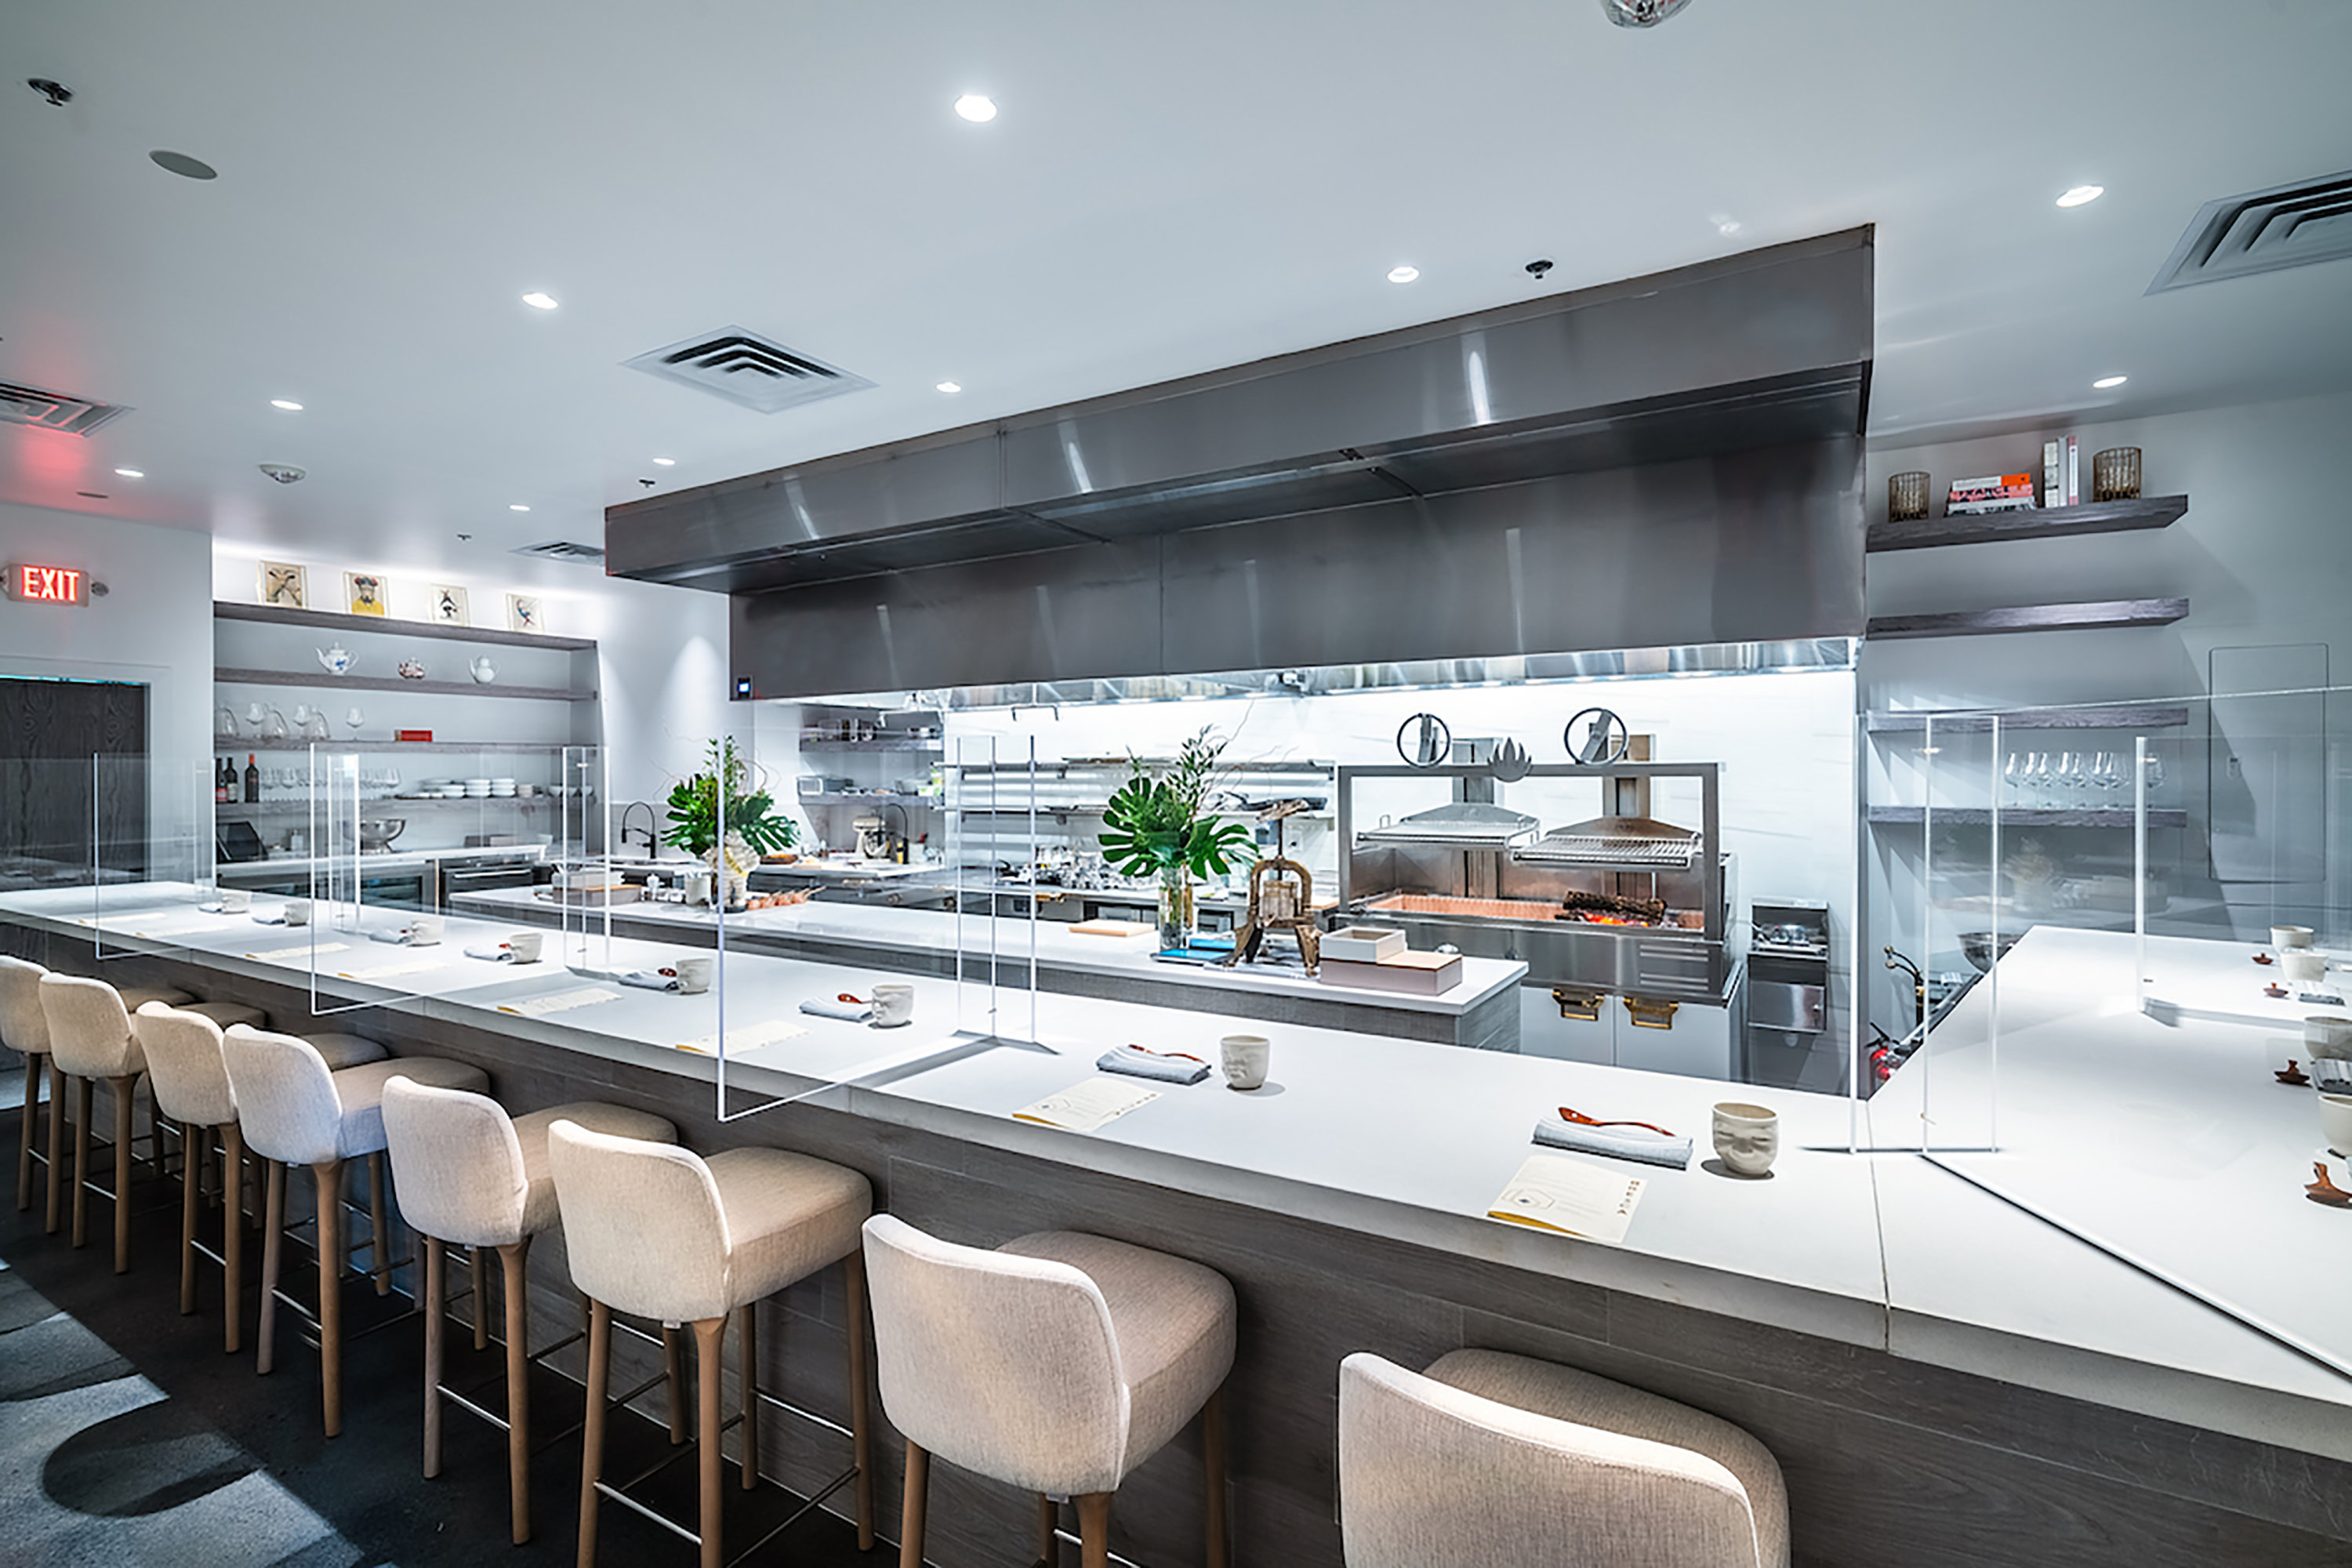 DC Gains Five New Starred Restaurants in 2021 Michelin Guide - Washingtonian